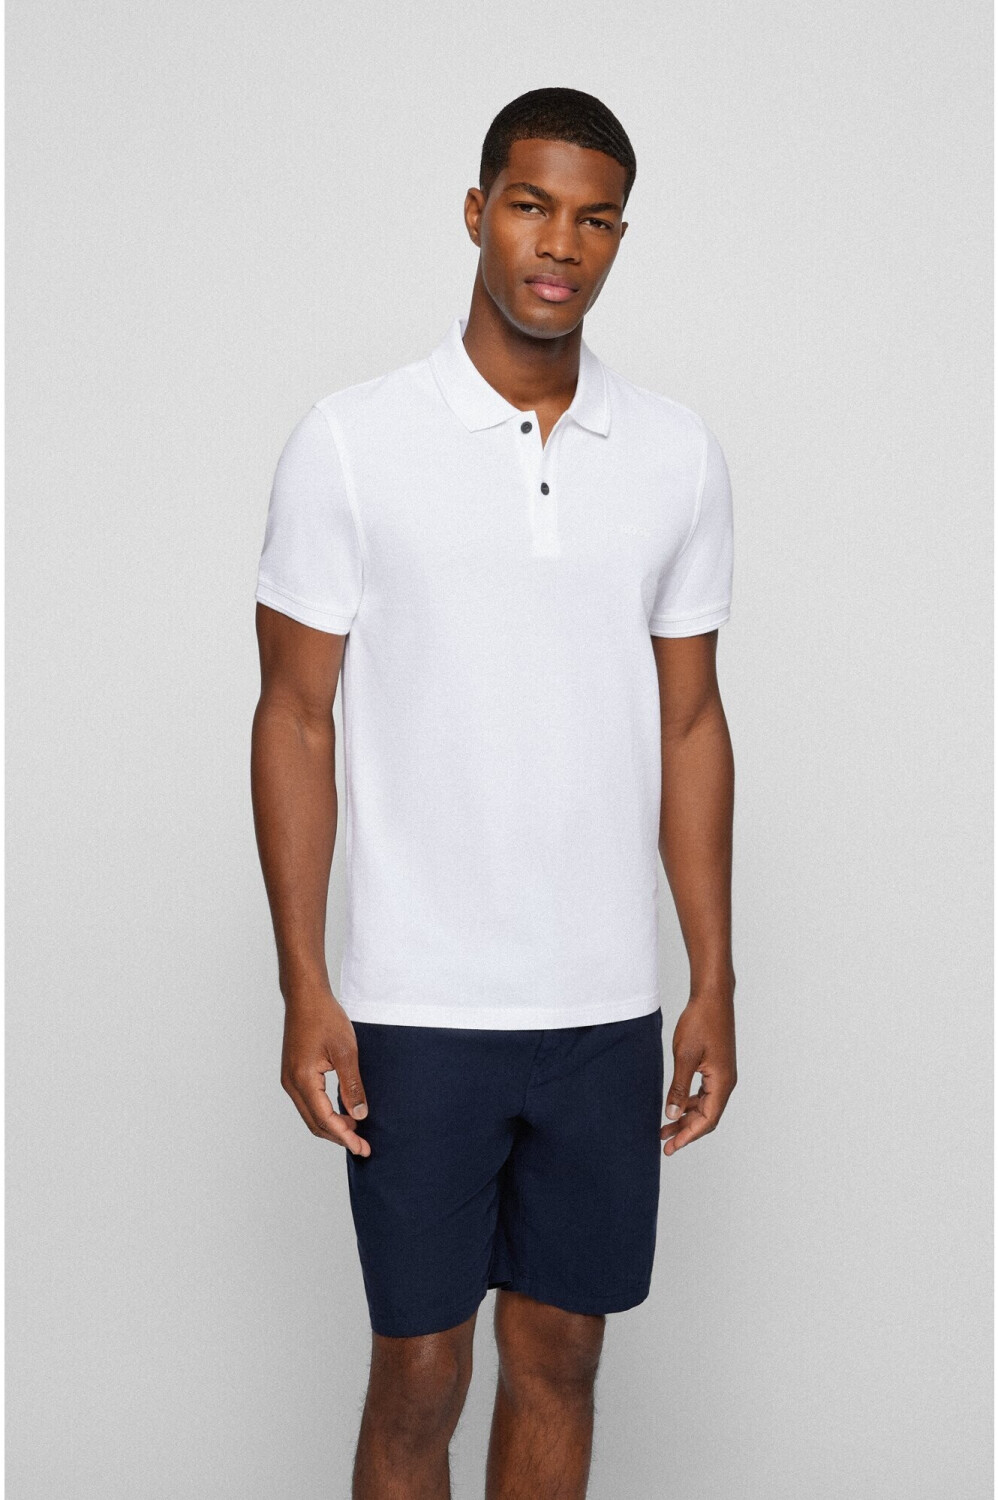 Hugo Boss Prime Slim-Fit Poloshirt | bei (50468576-100) ab white € Preisvergleich 48,00